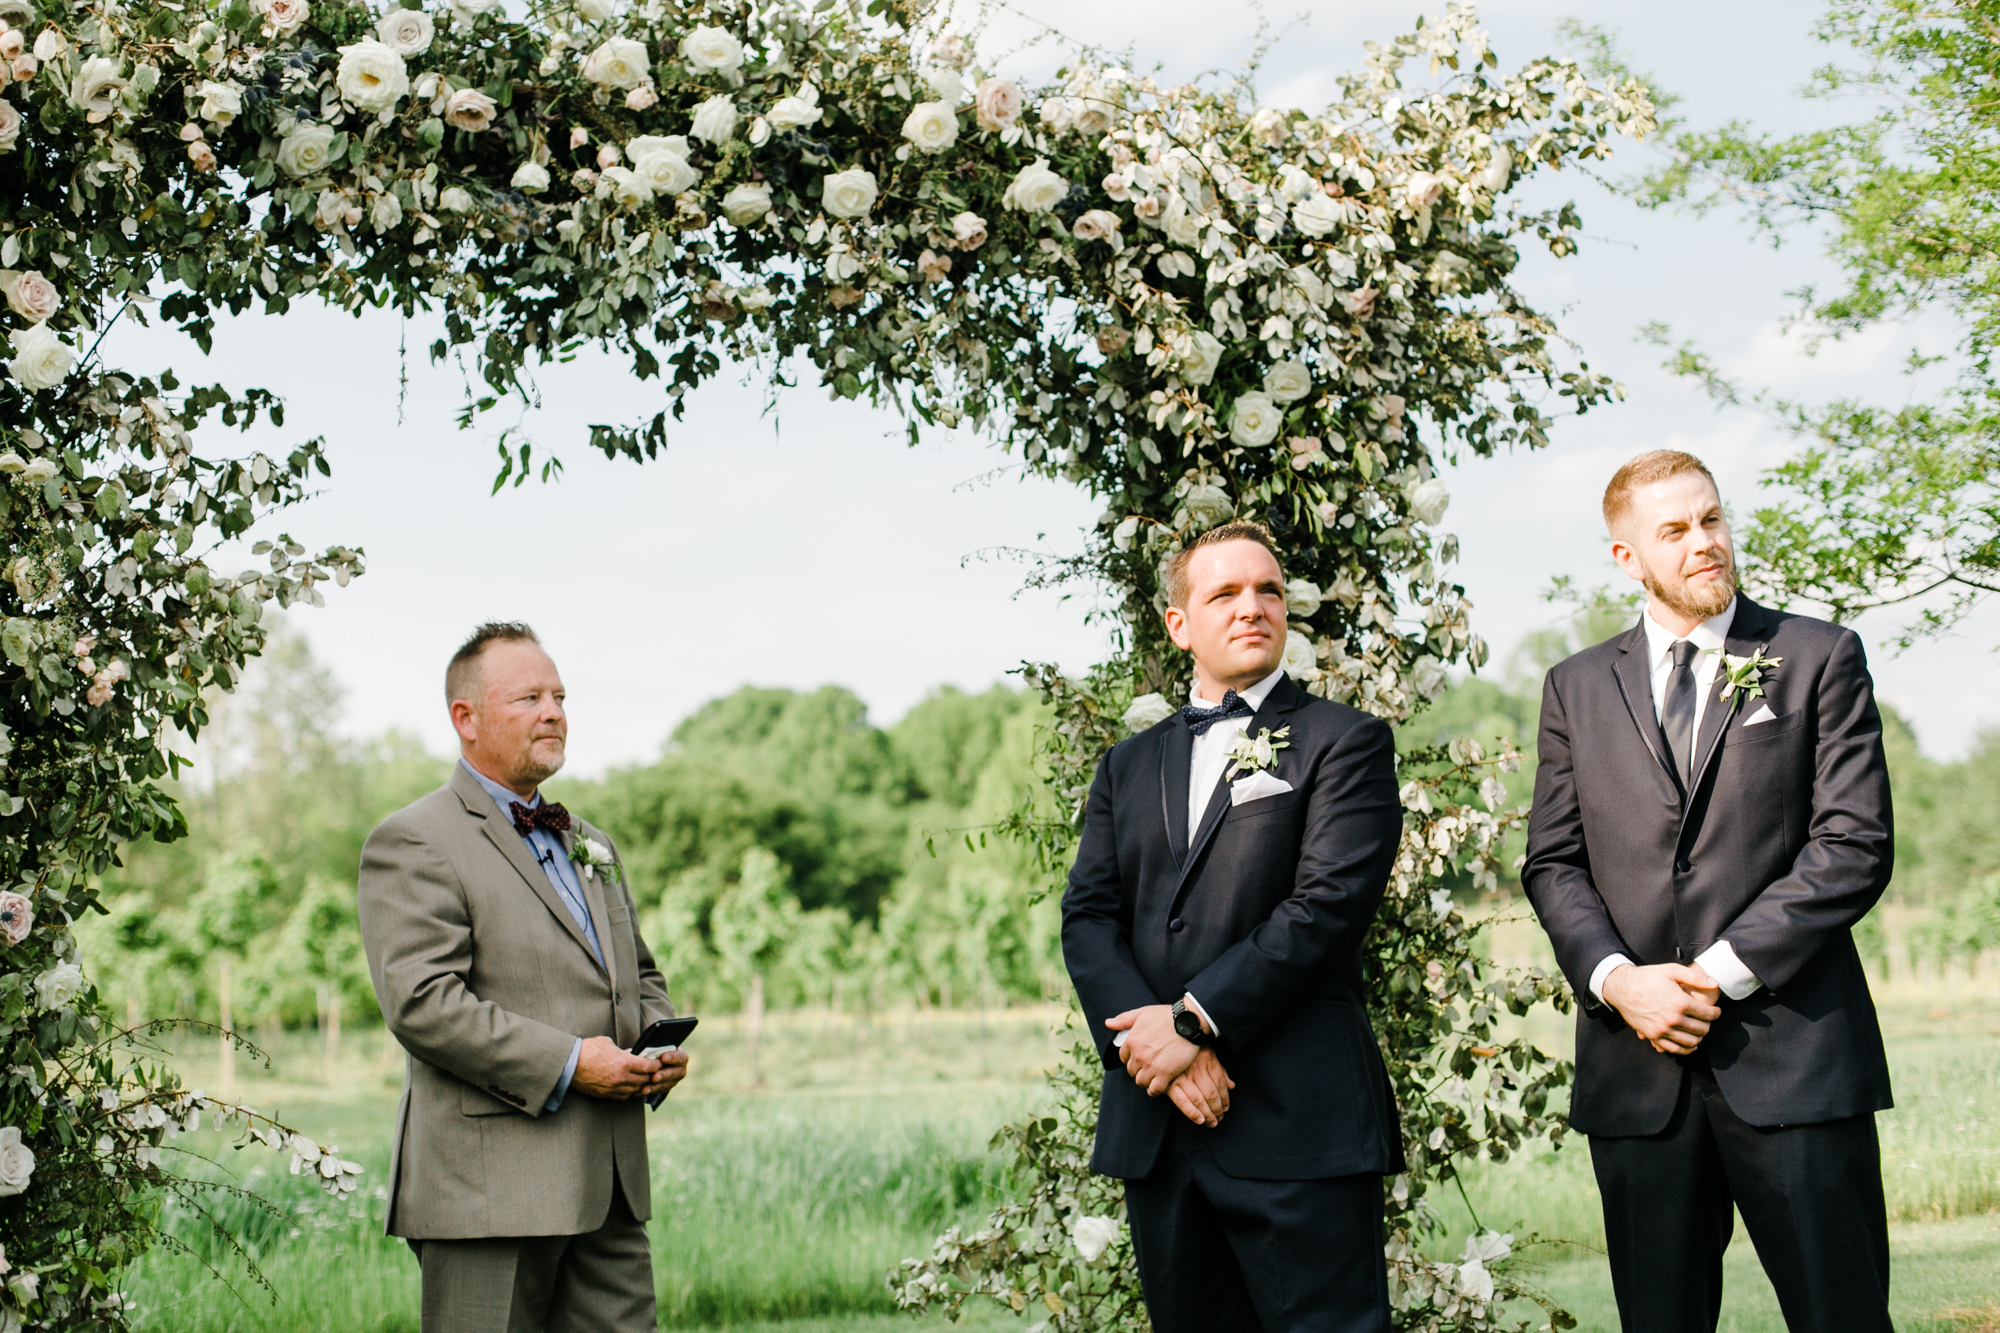 Natural, organic floral arch for the wedding ceremony backdrop // Nashville Wedding Florist